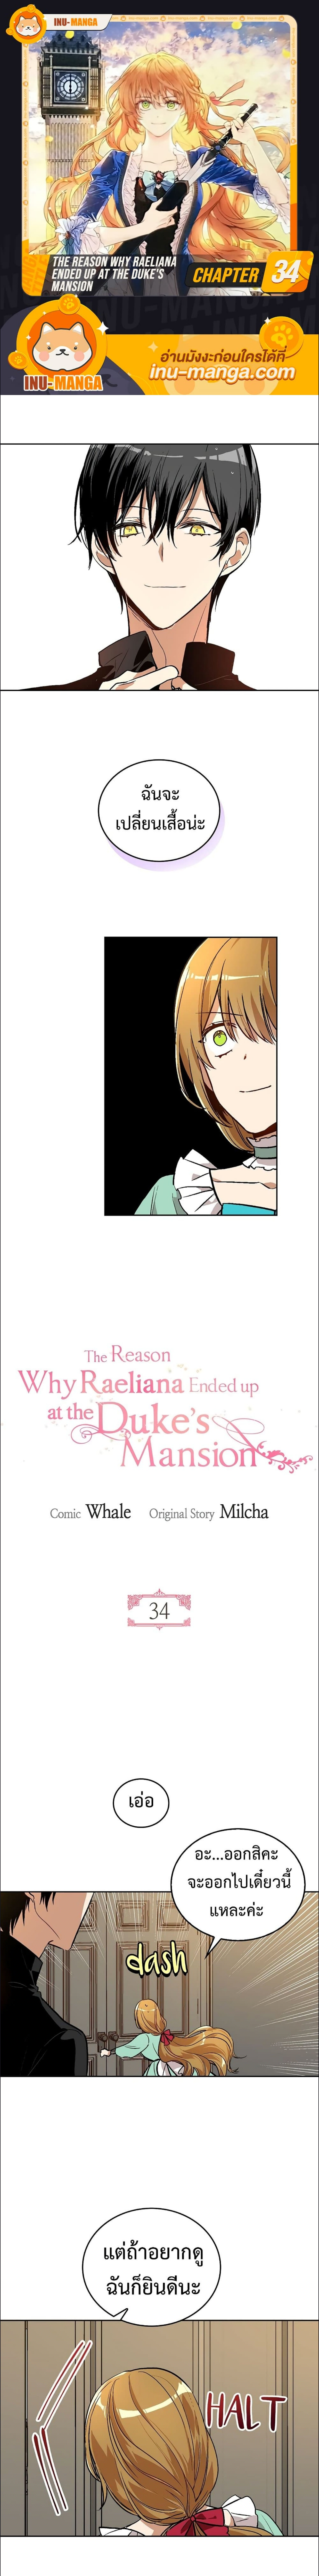 The Reason Why Raeliana Ended up at the Dukeโ€s Mansion เธ•เธญเธเธ—เธตเน 34 (1)